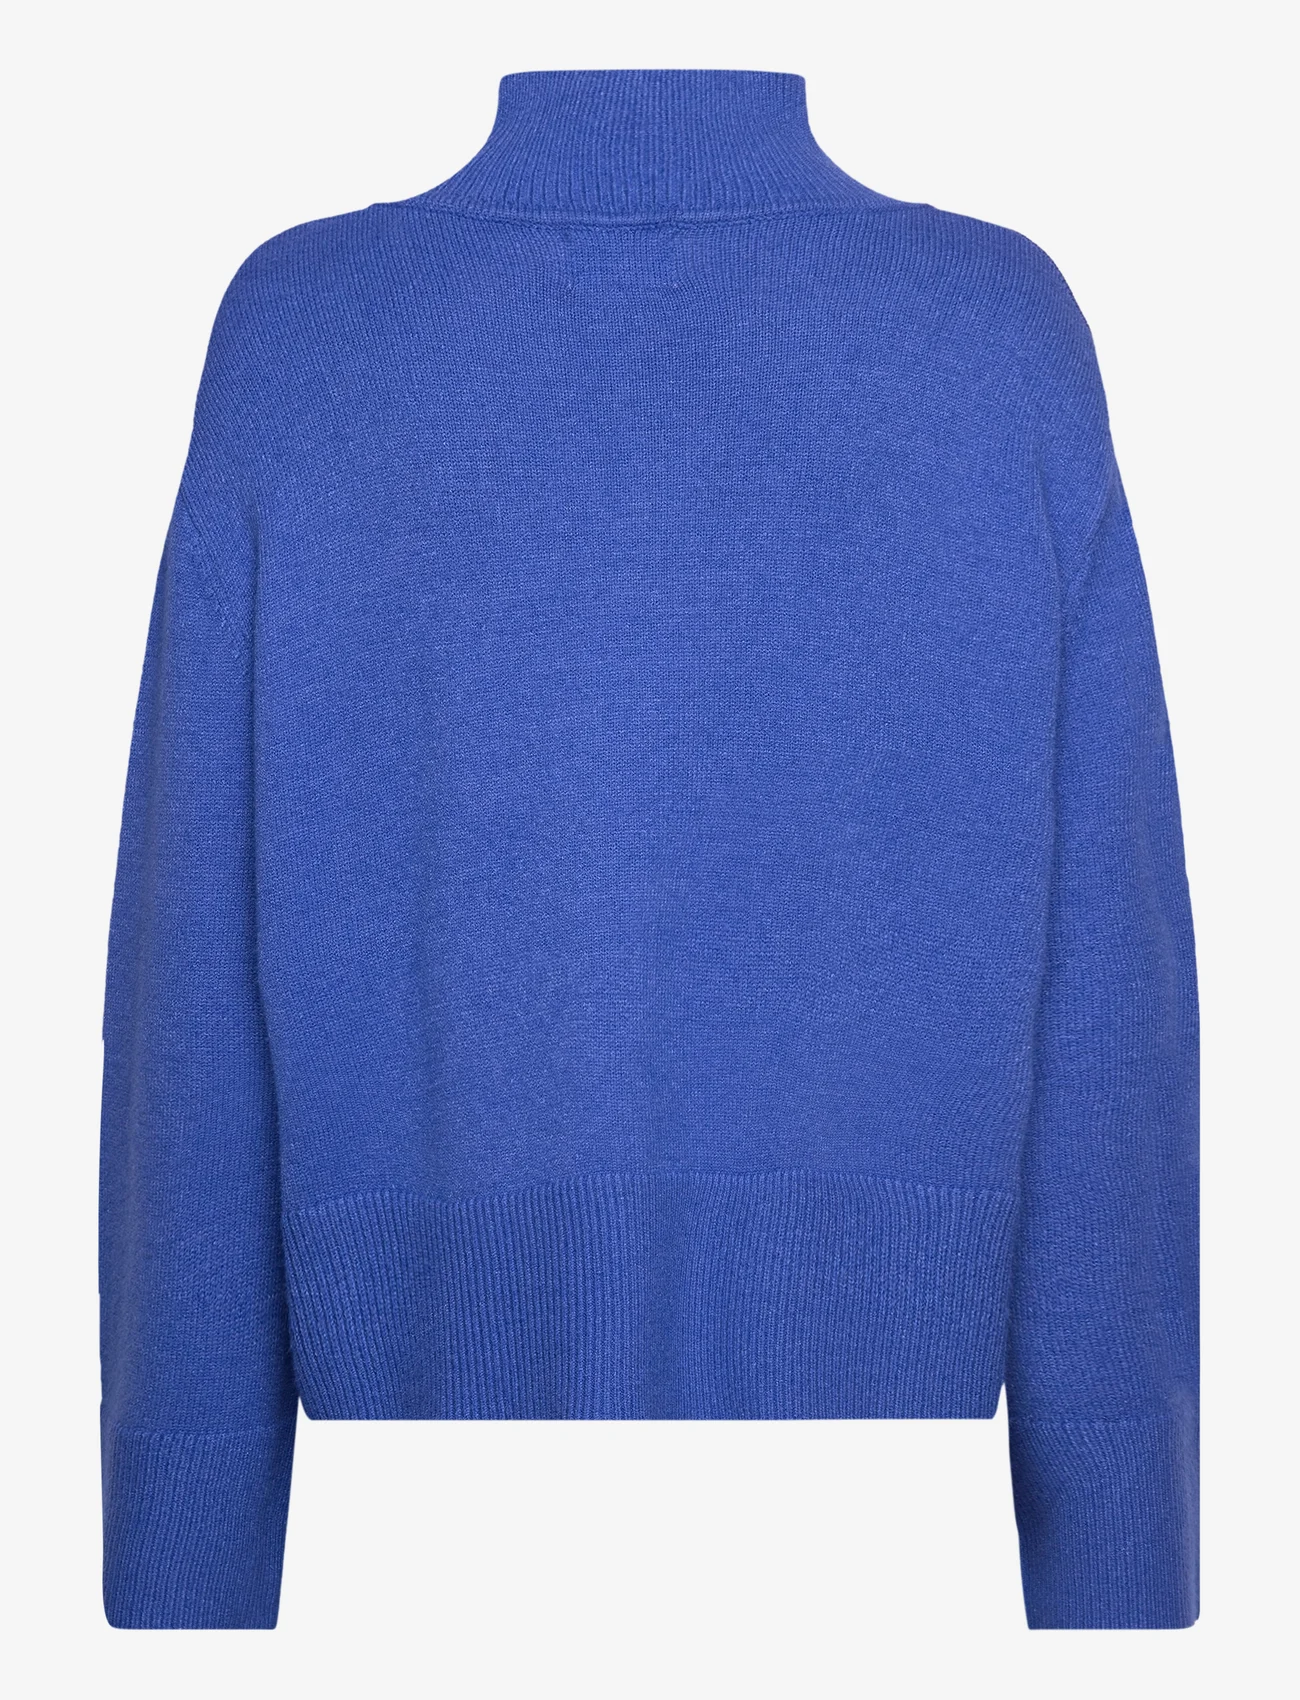 NORR - Lindsay WS knit top - kõrge kaelusega džemprid - blue - 1